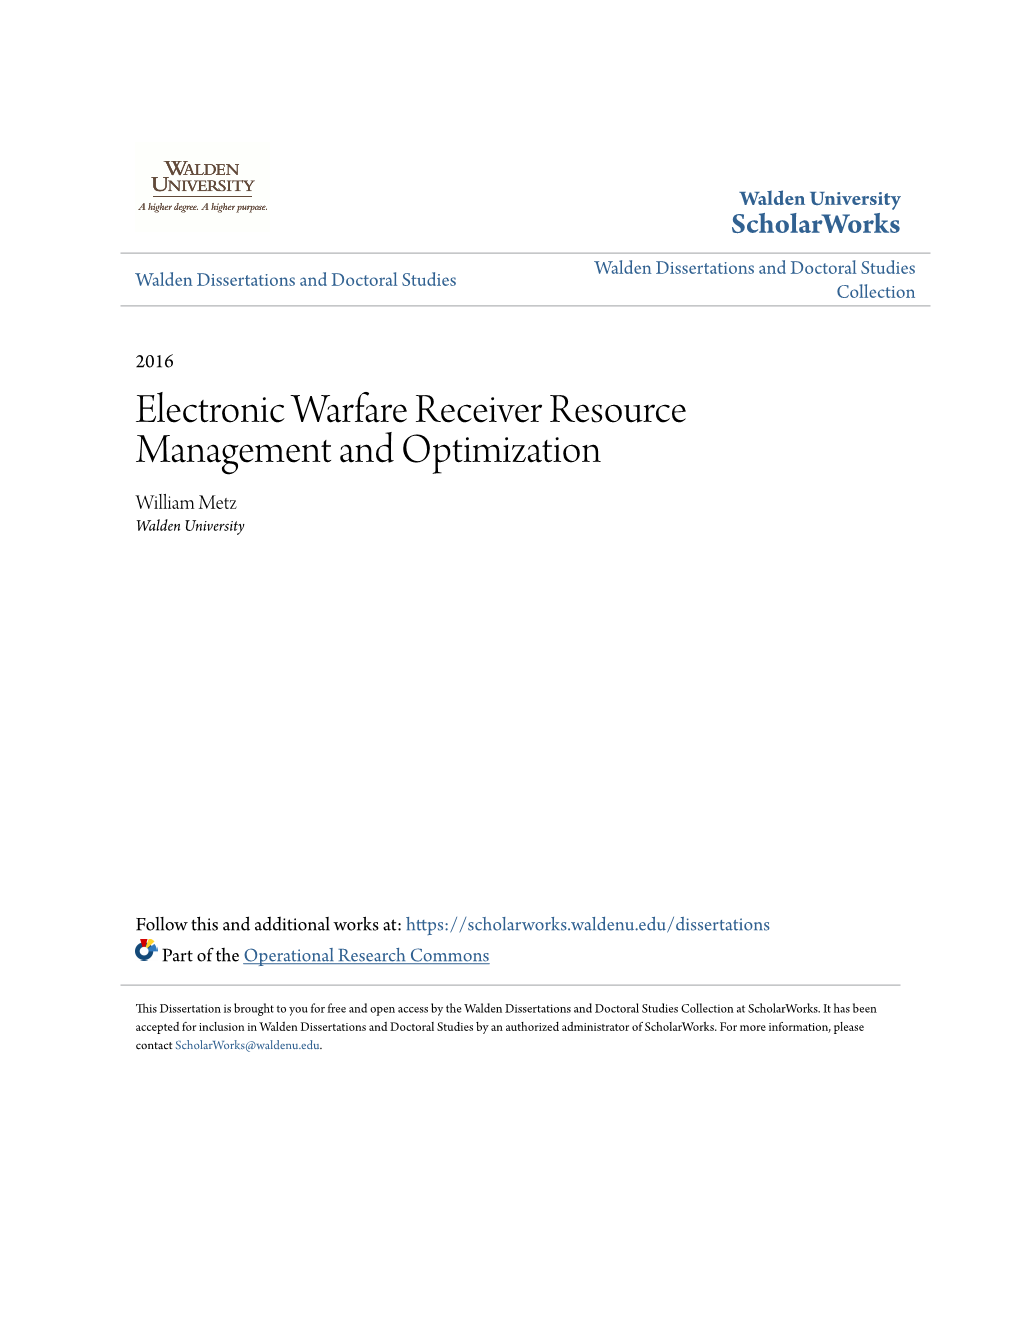 Electronic Warfare Receiver Resource Management and Optimization William Metz Walden University